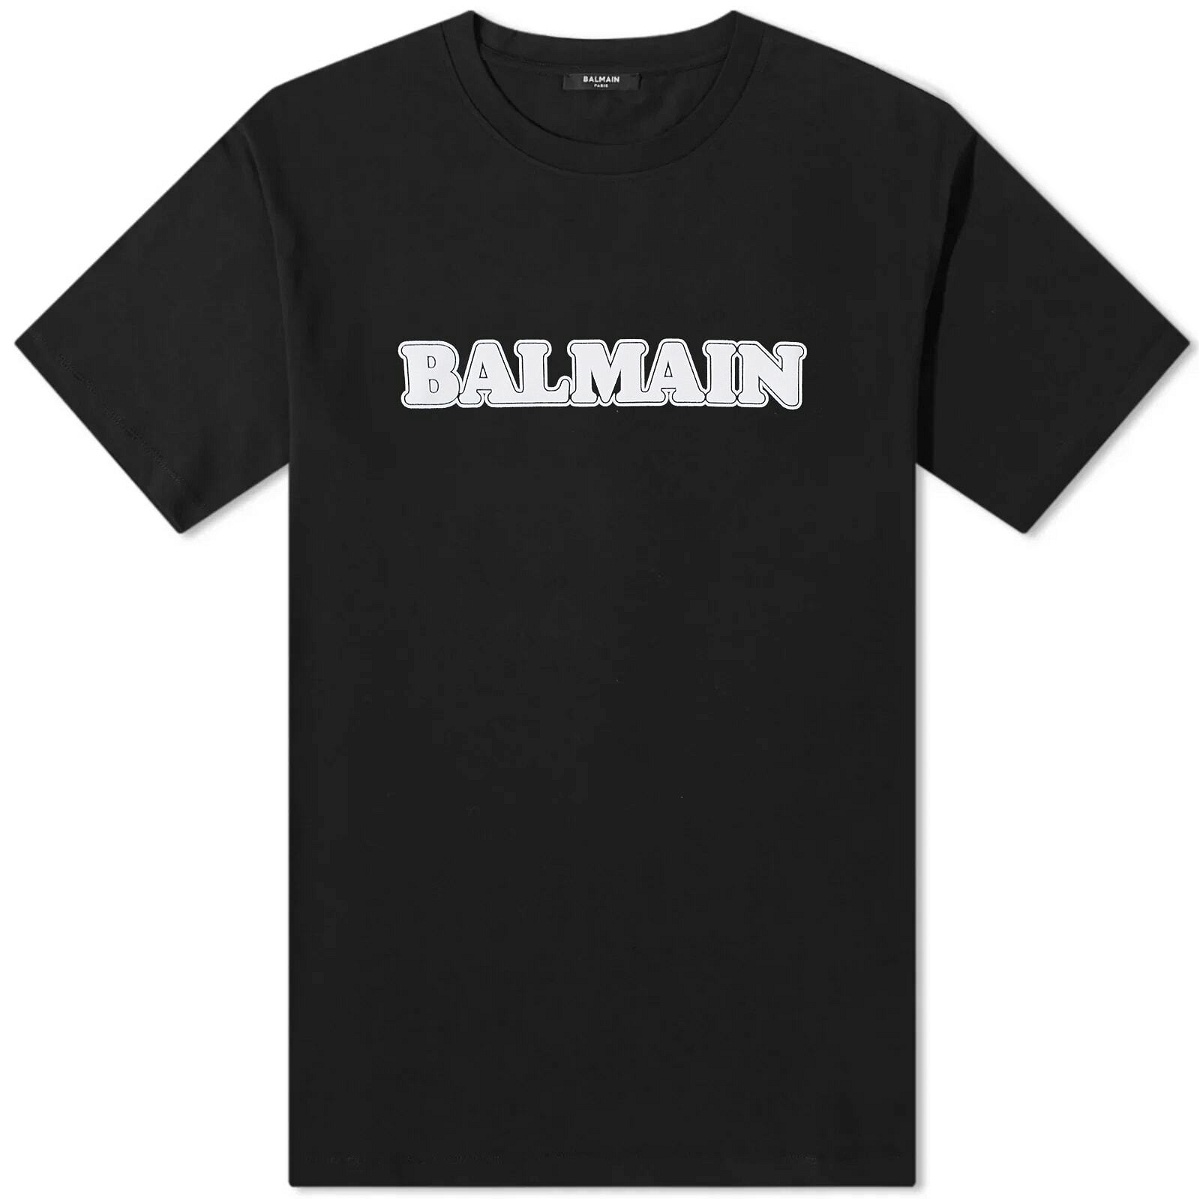 Balmain Men's Retro Logo T-Shirt in Black/White Balmain